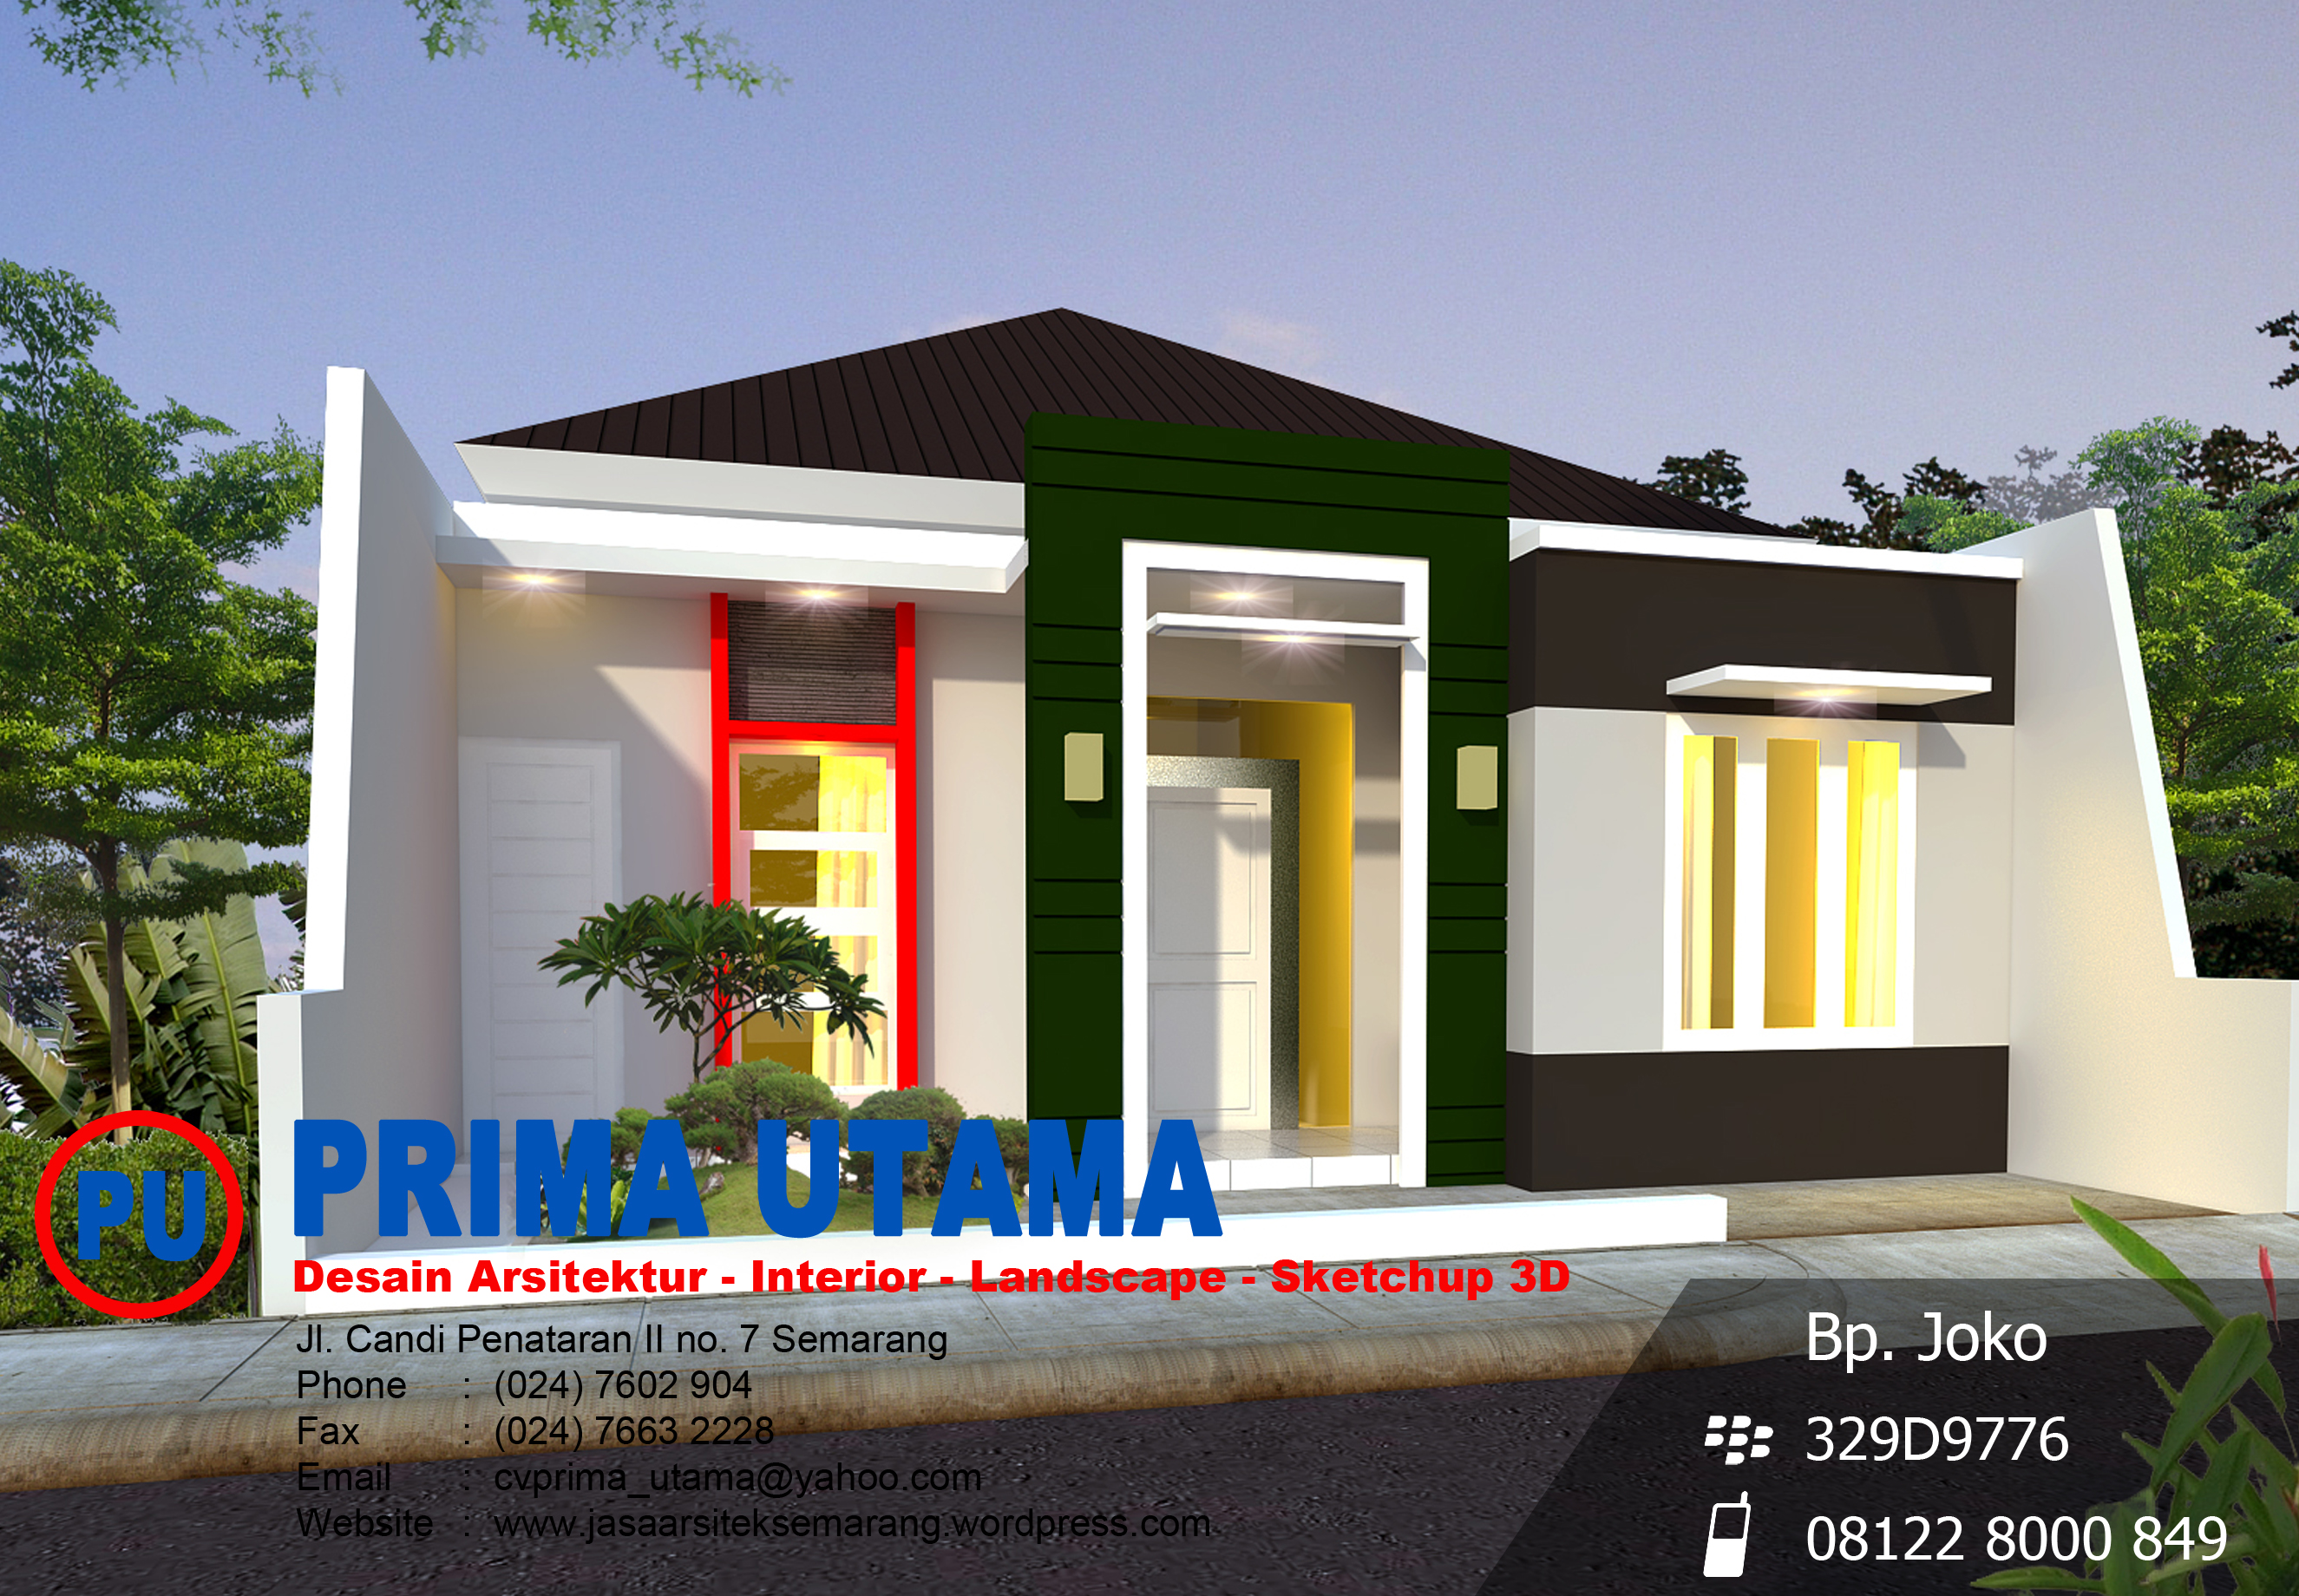 Cv Prima Utama Jasa Desain Rumah  newhairstylesformen2014.com